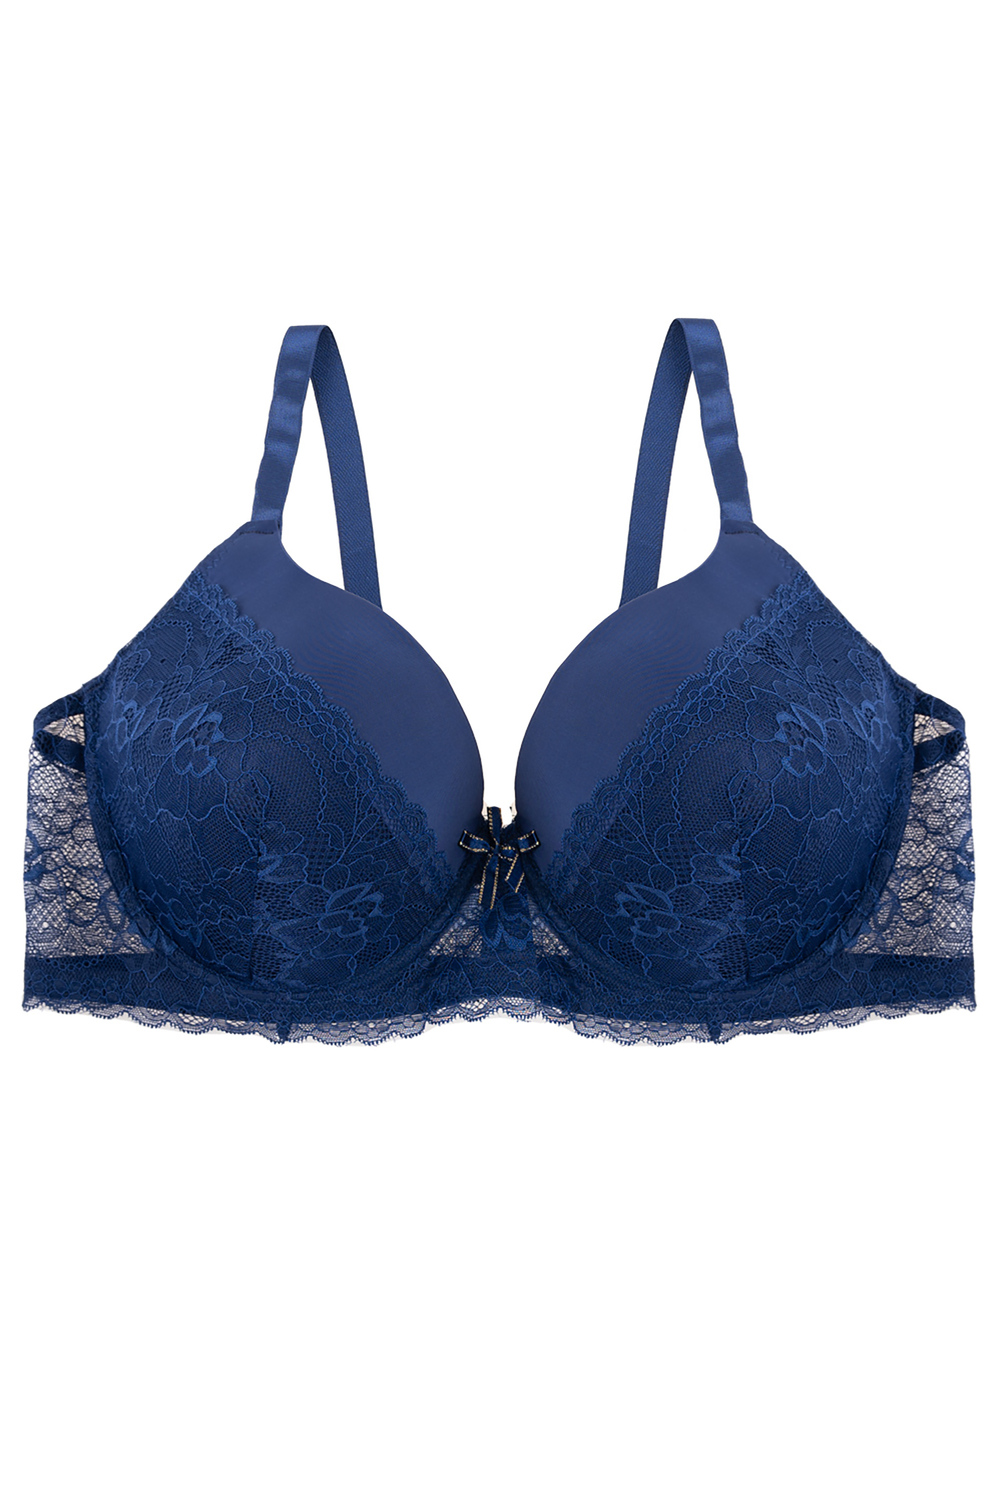 Navy blue lace strapless bra. Size 38 B. Sophie b brand.